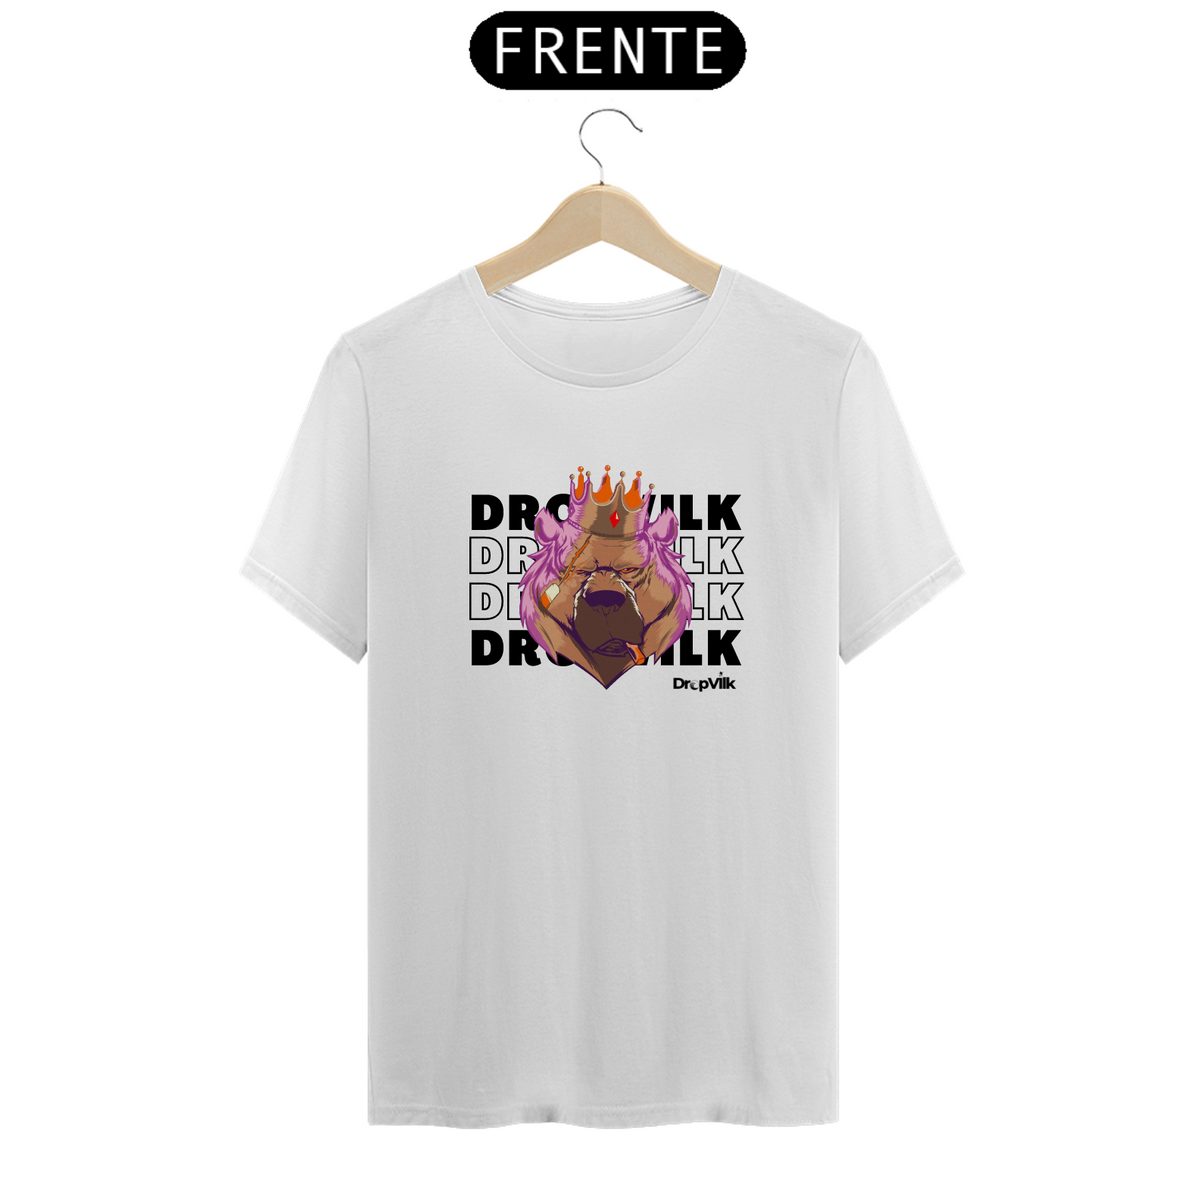 Nome do produto: Camiseta King DropVilk unissex